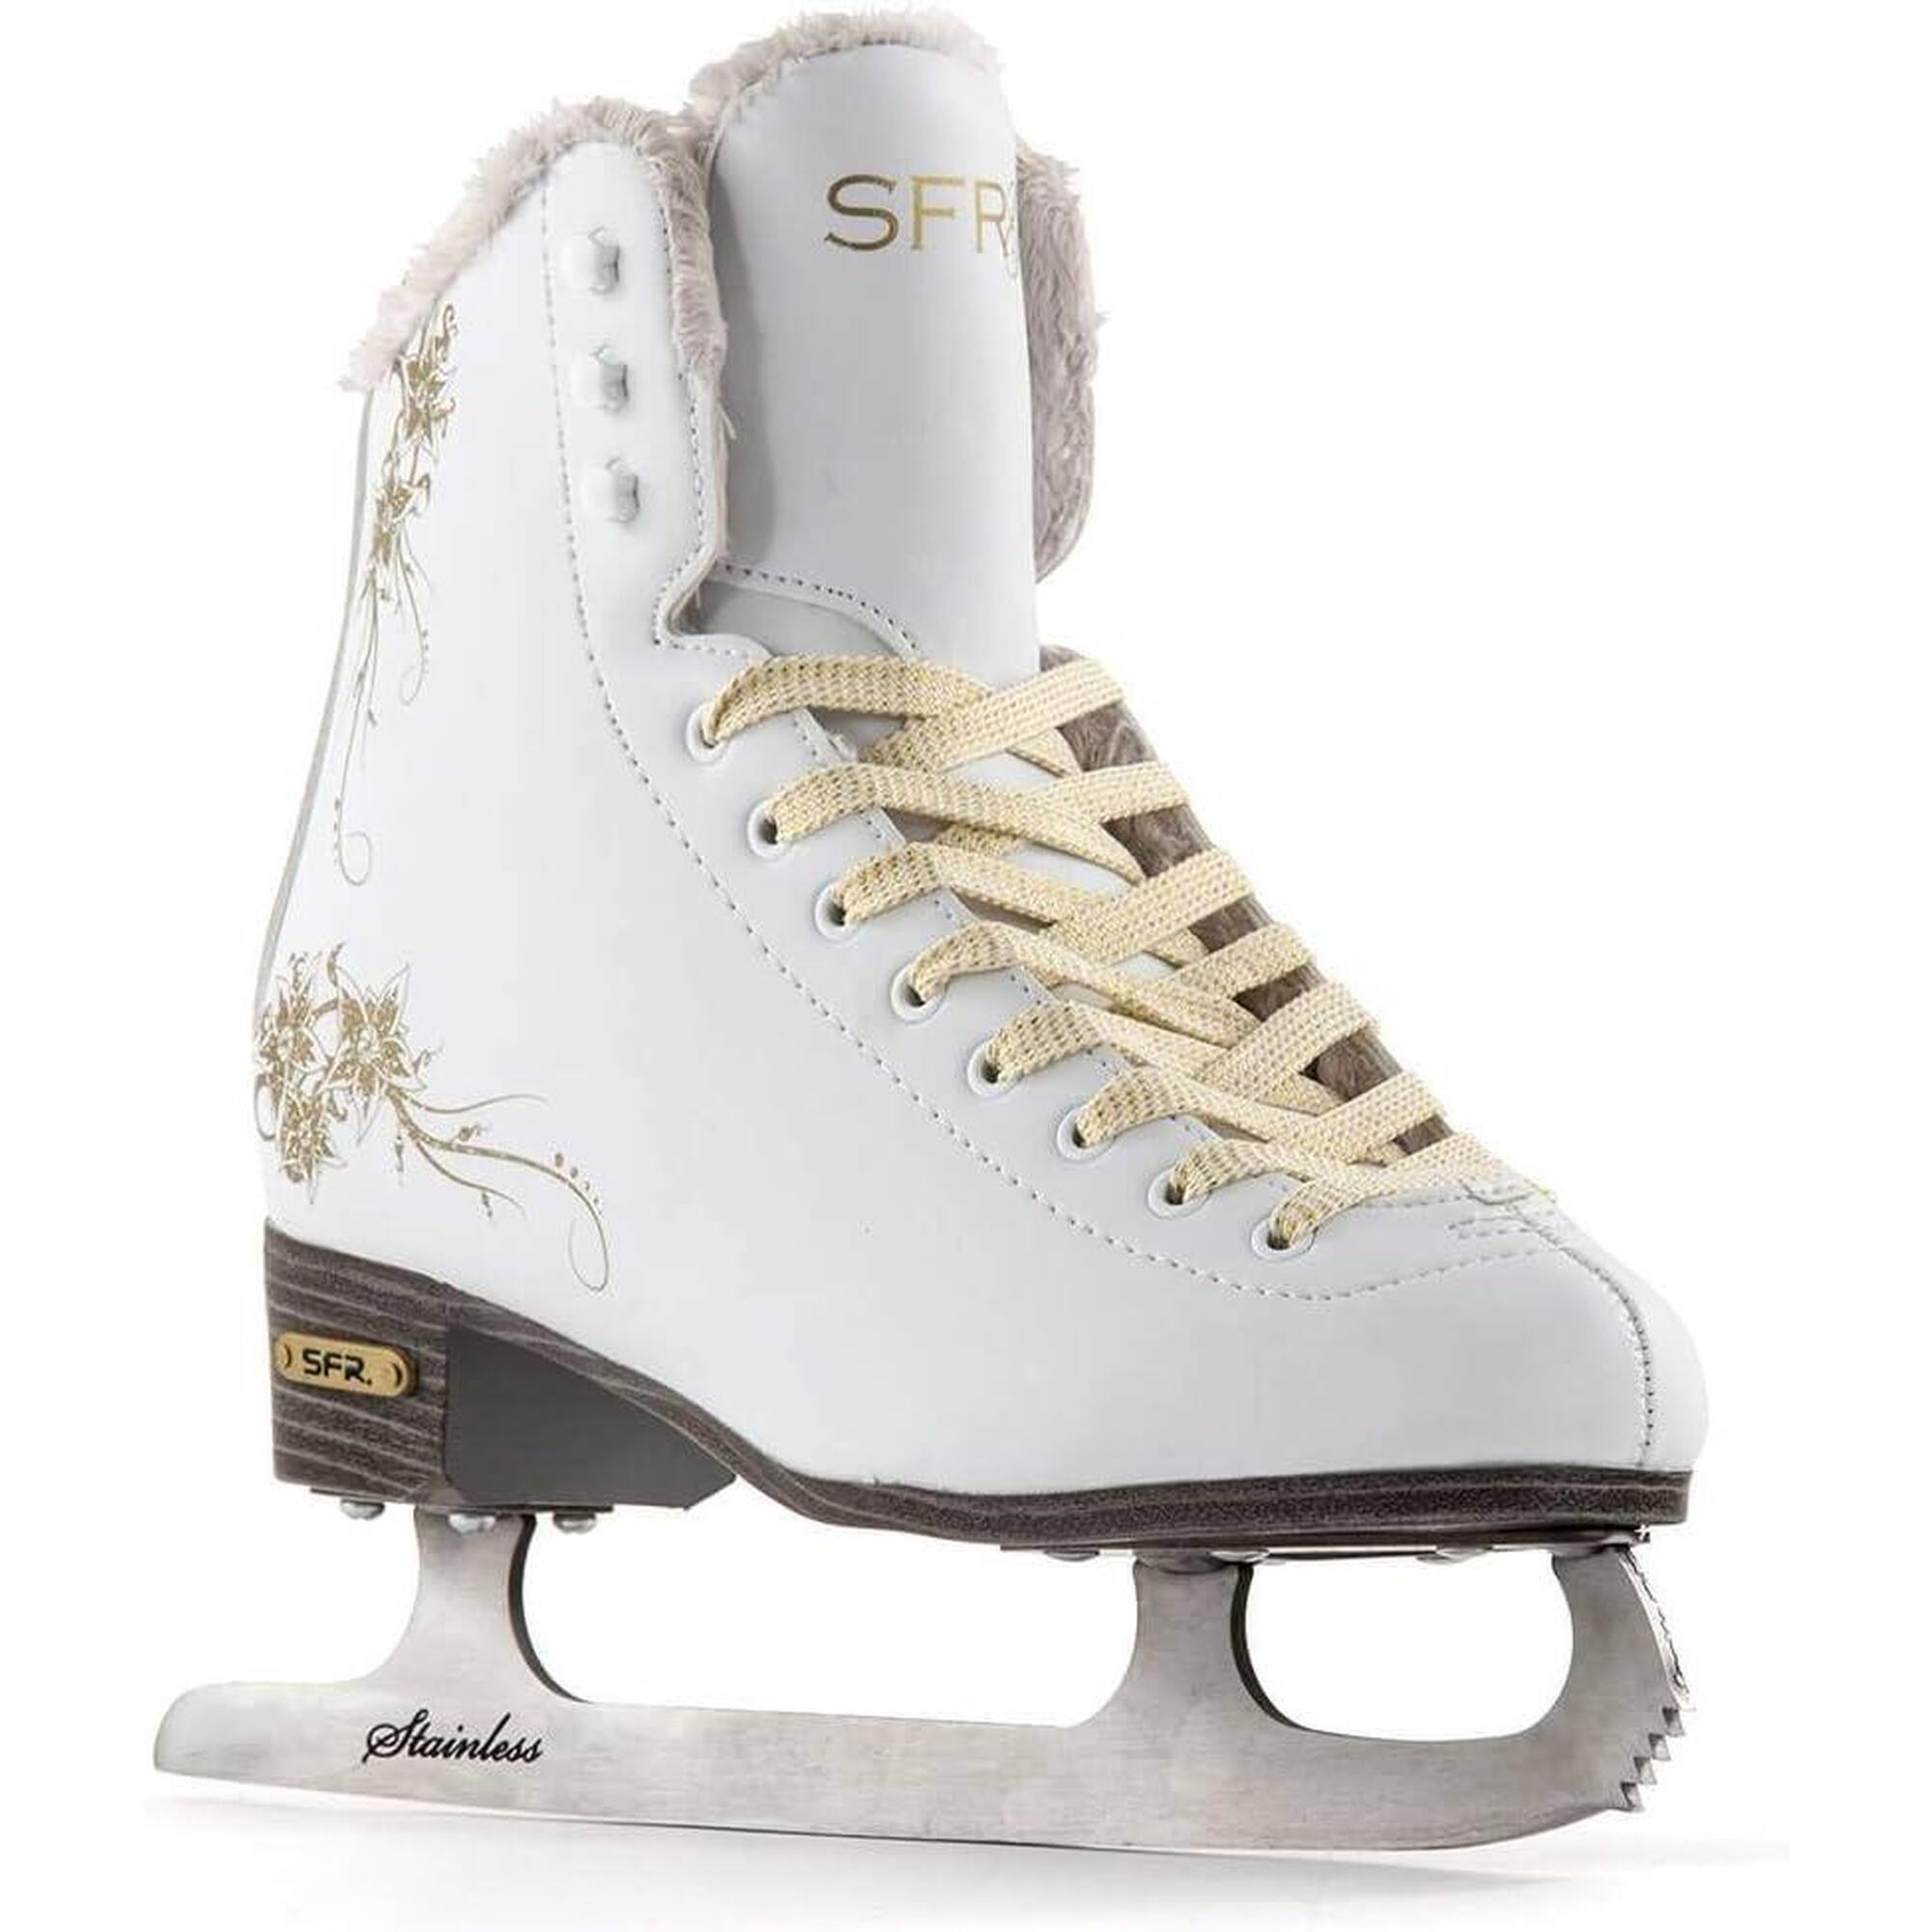 SFR Glitra White Ice Skates - Size: UK 2